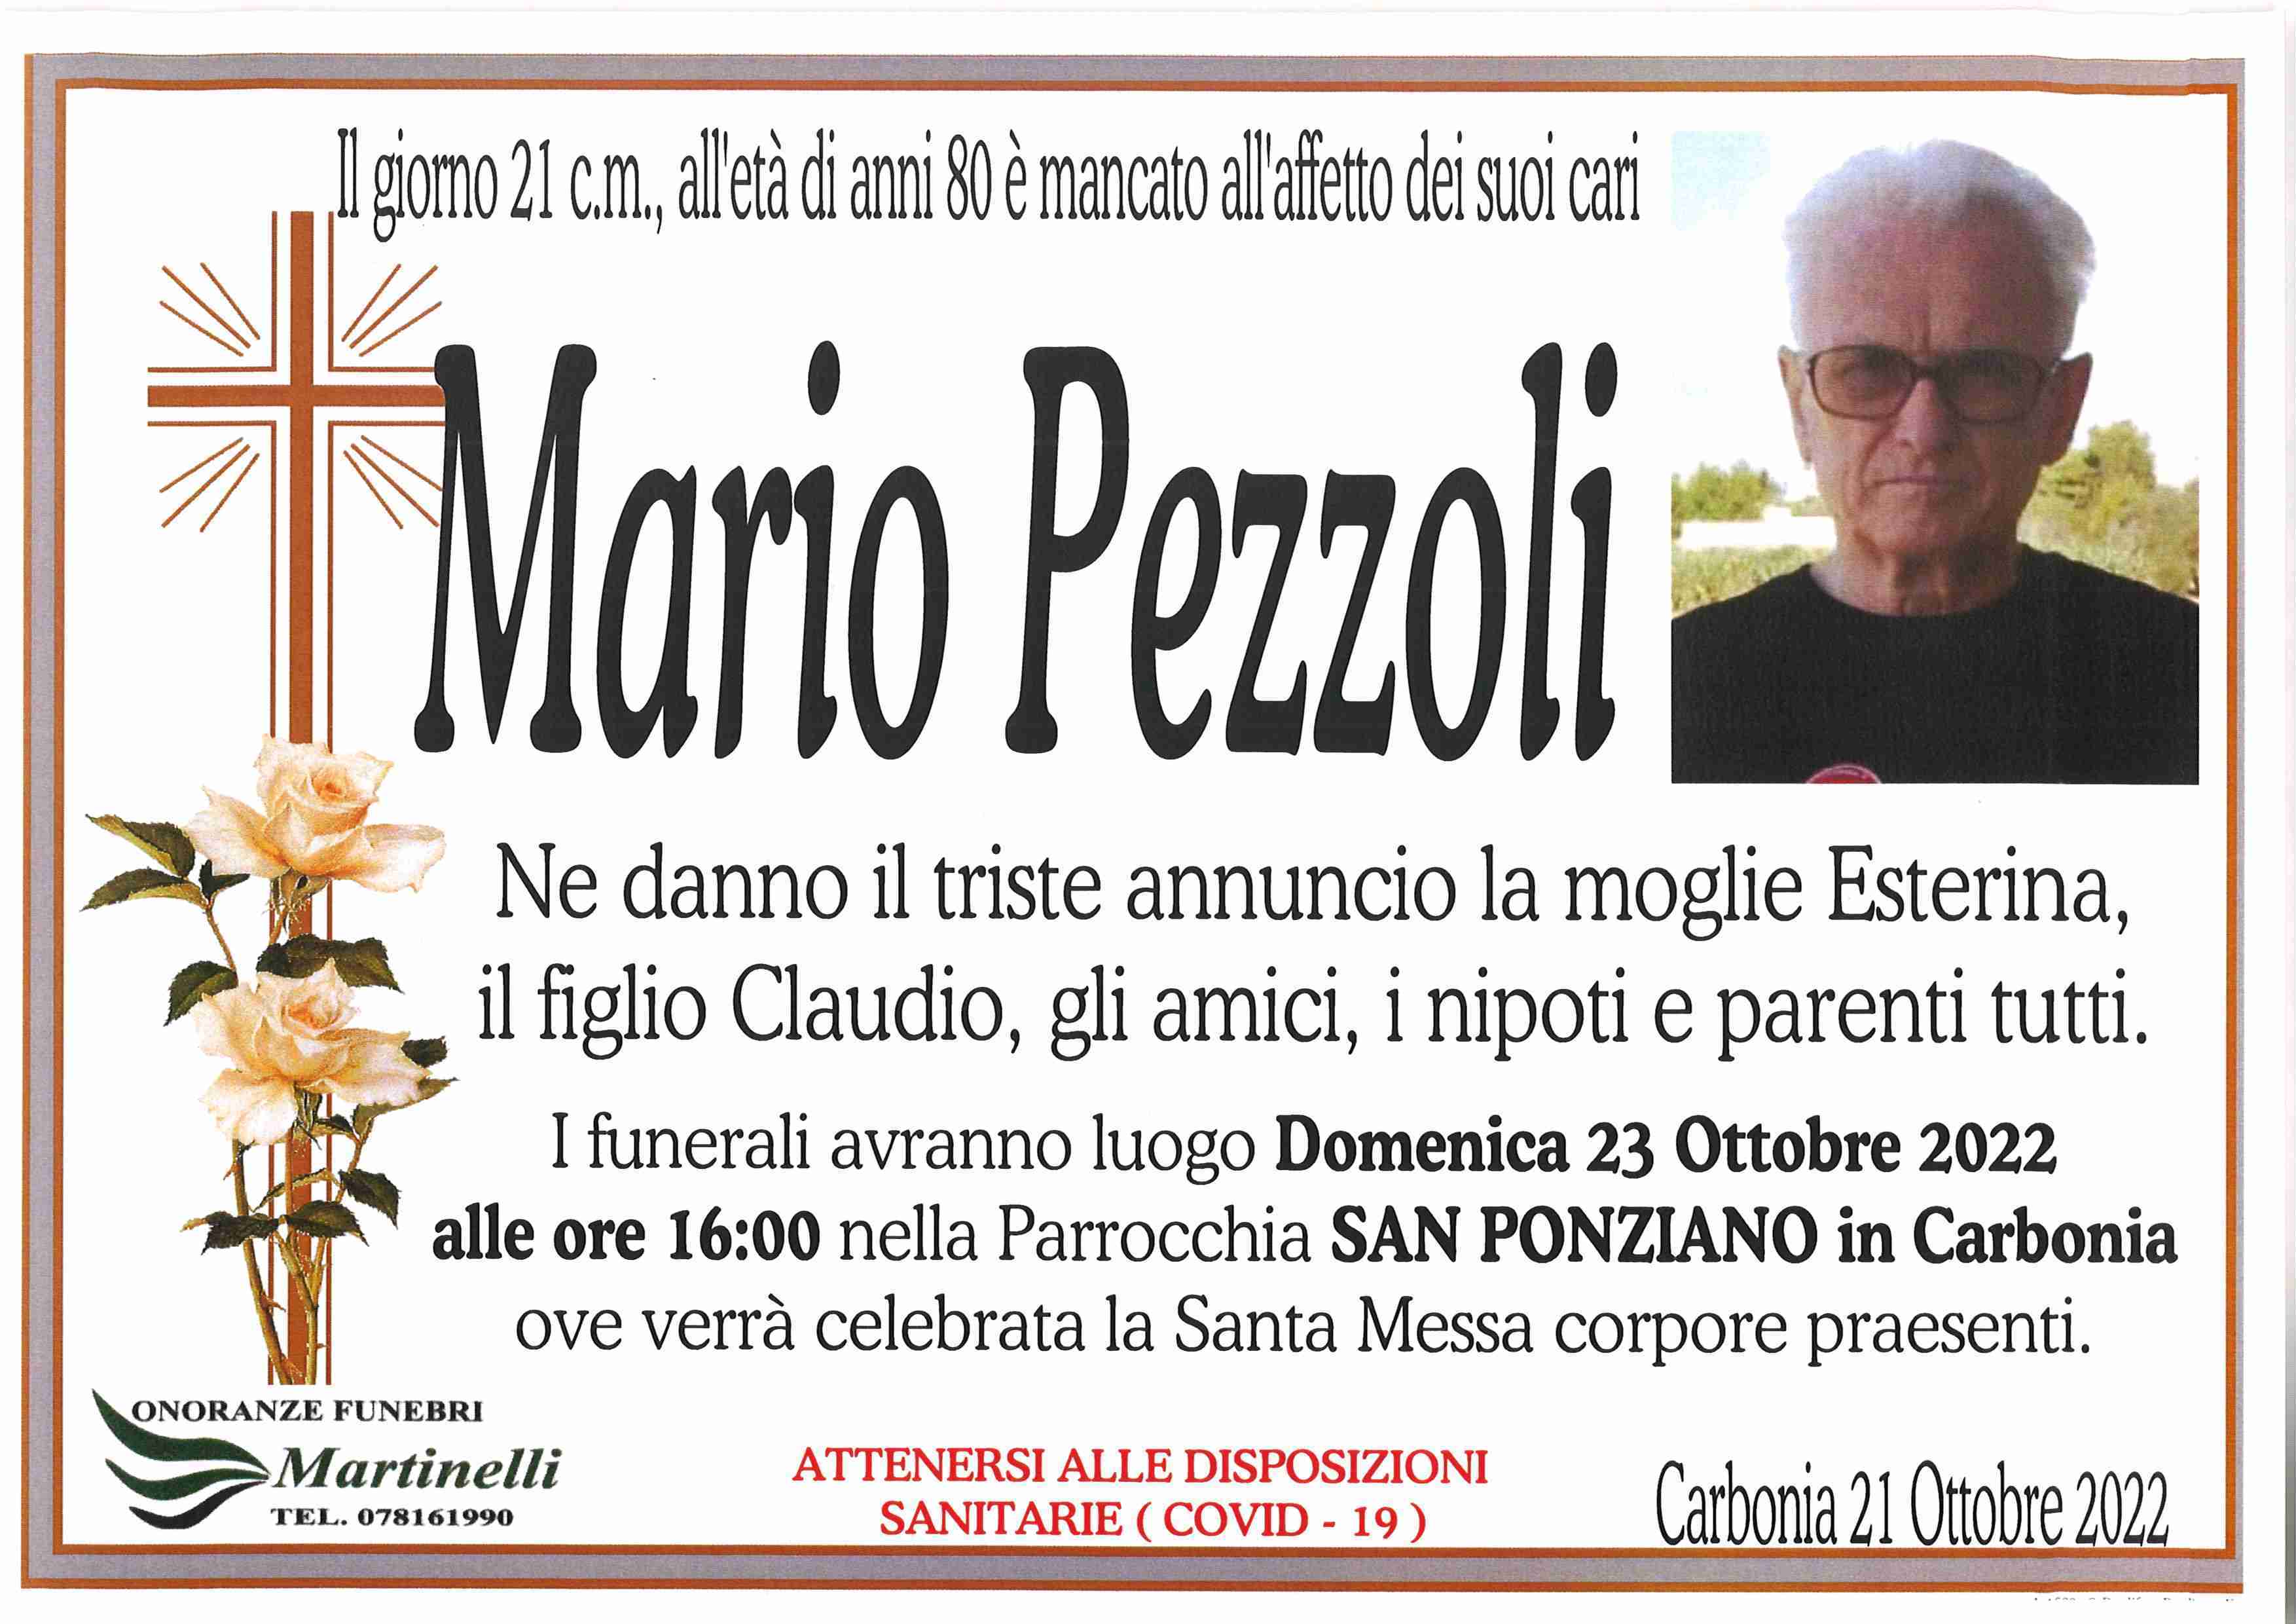 Mario Pezzoli